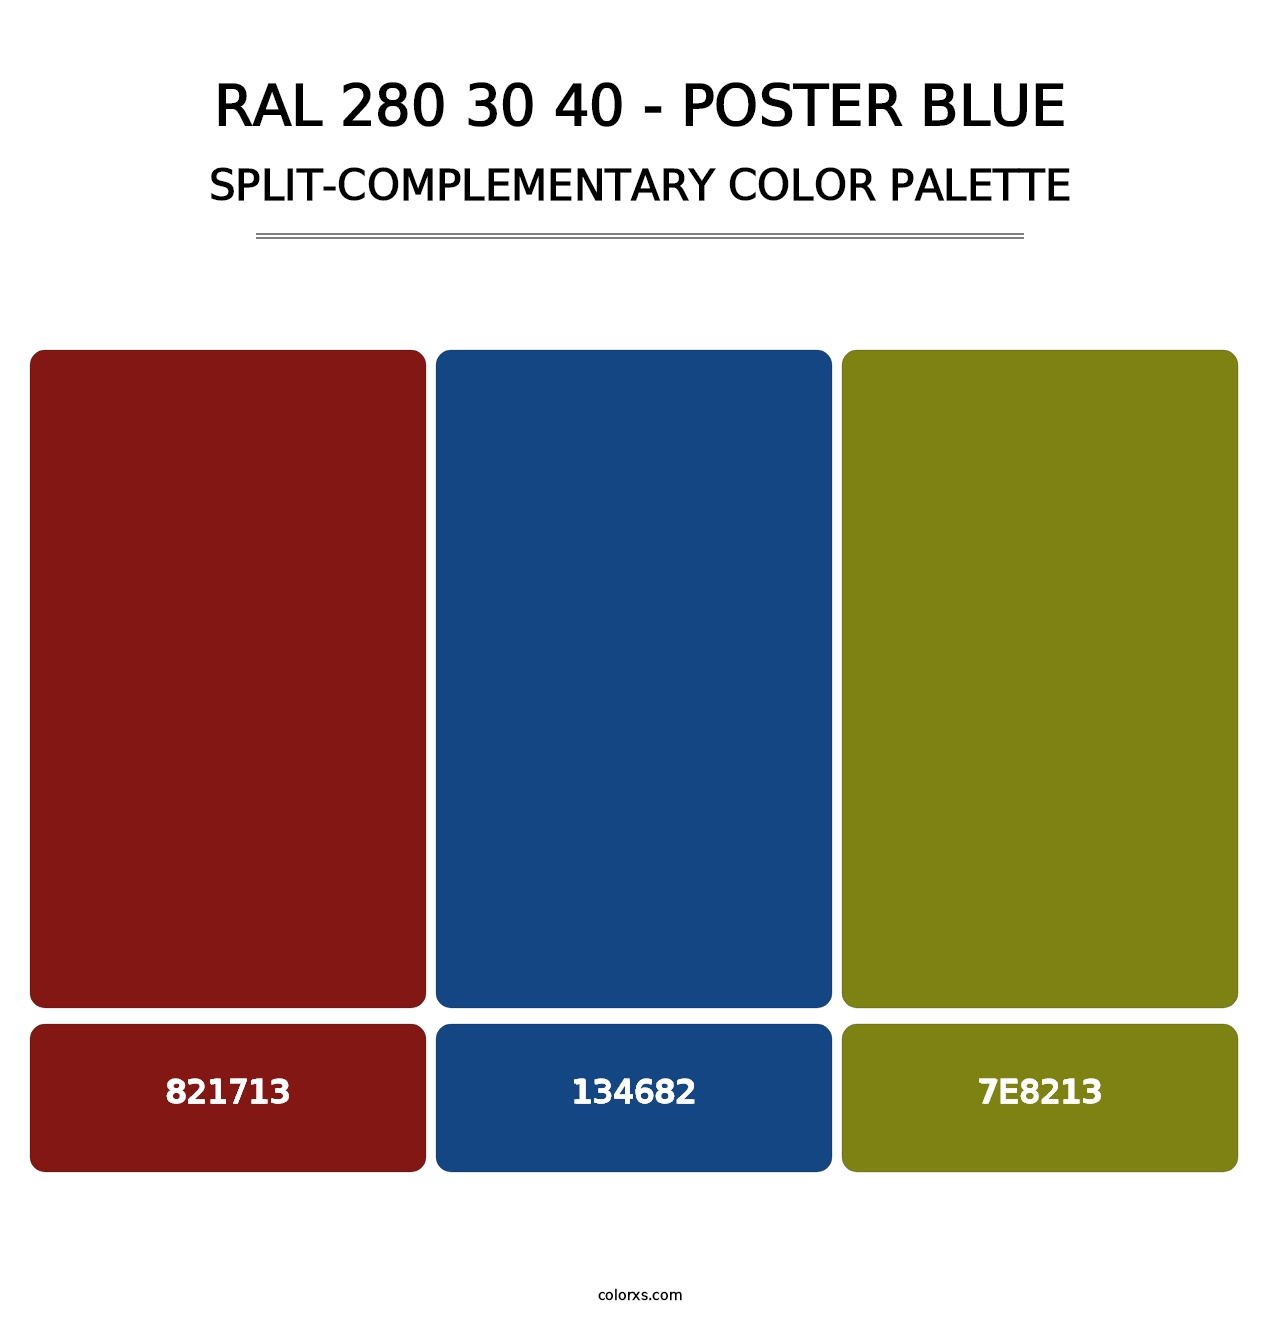 RAL 280 30 40 - Poster Blue - Split-Complementary Color Palette